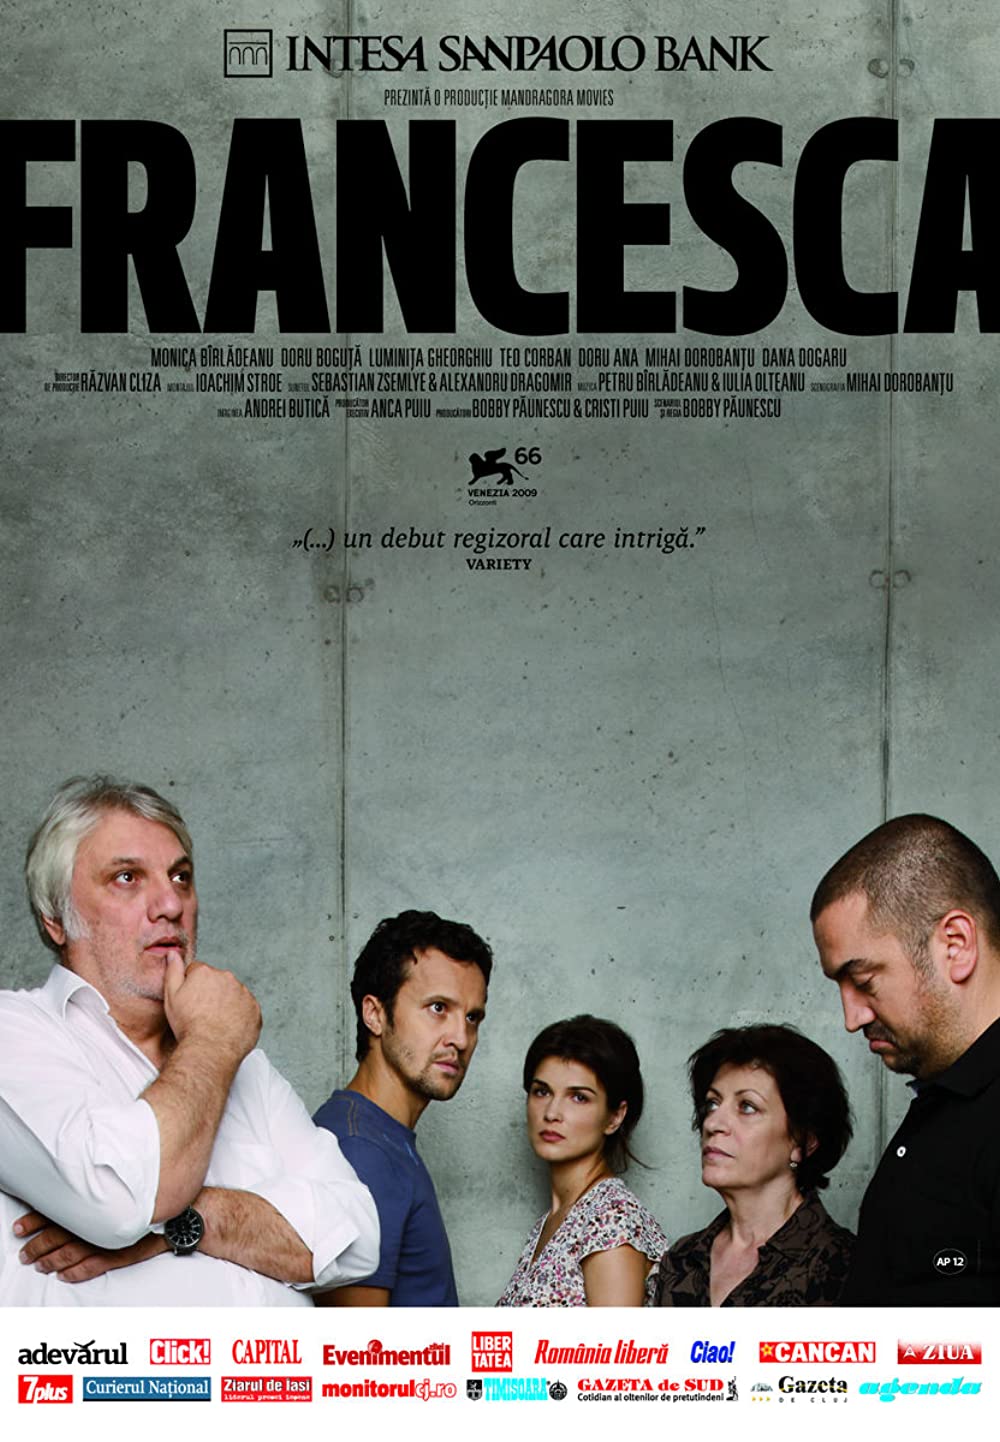 Download Francesca Movie | Francesca Review